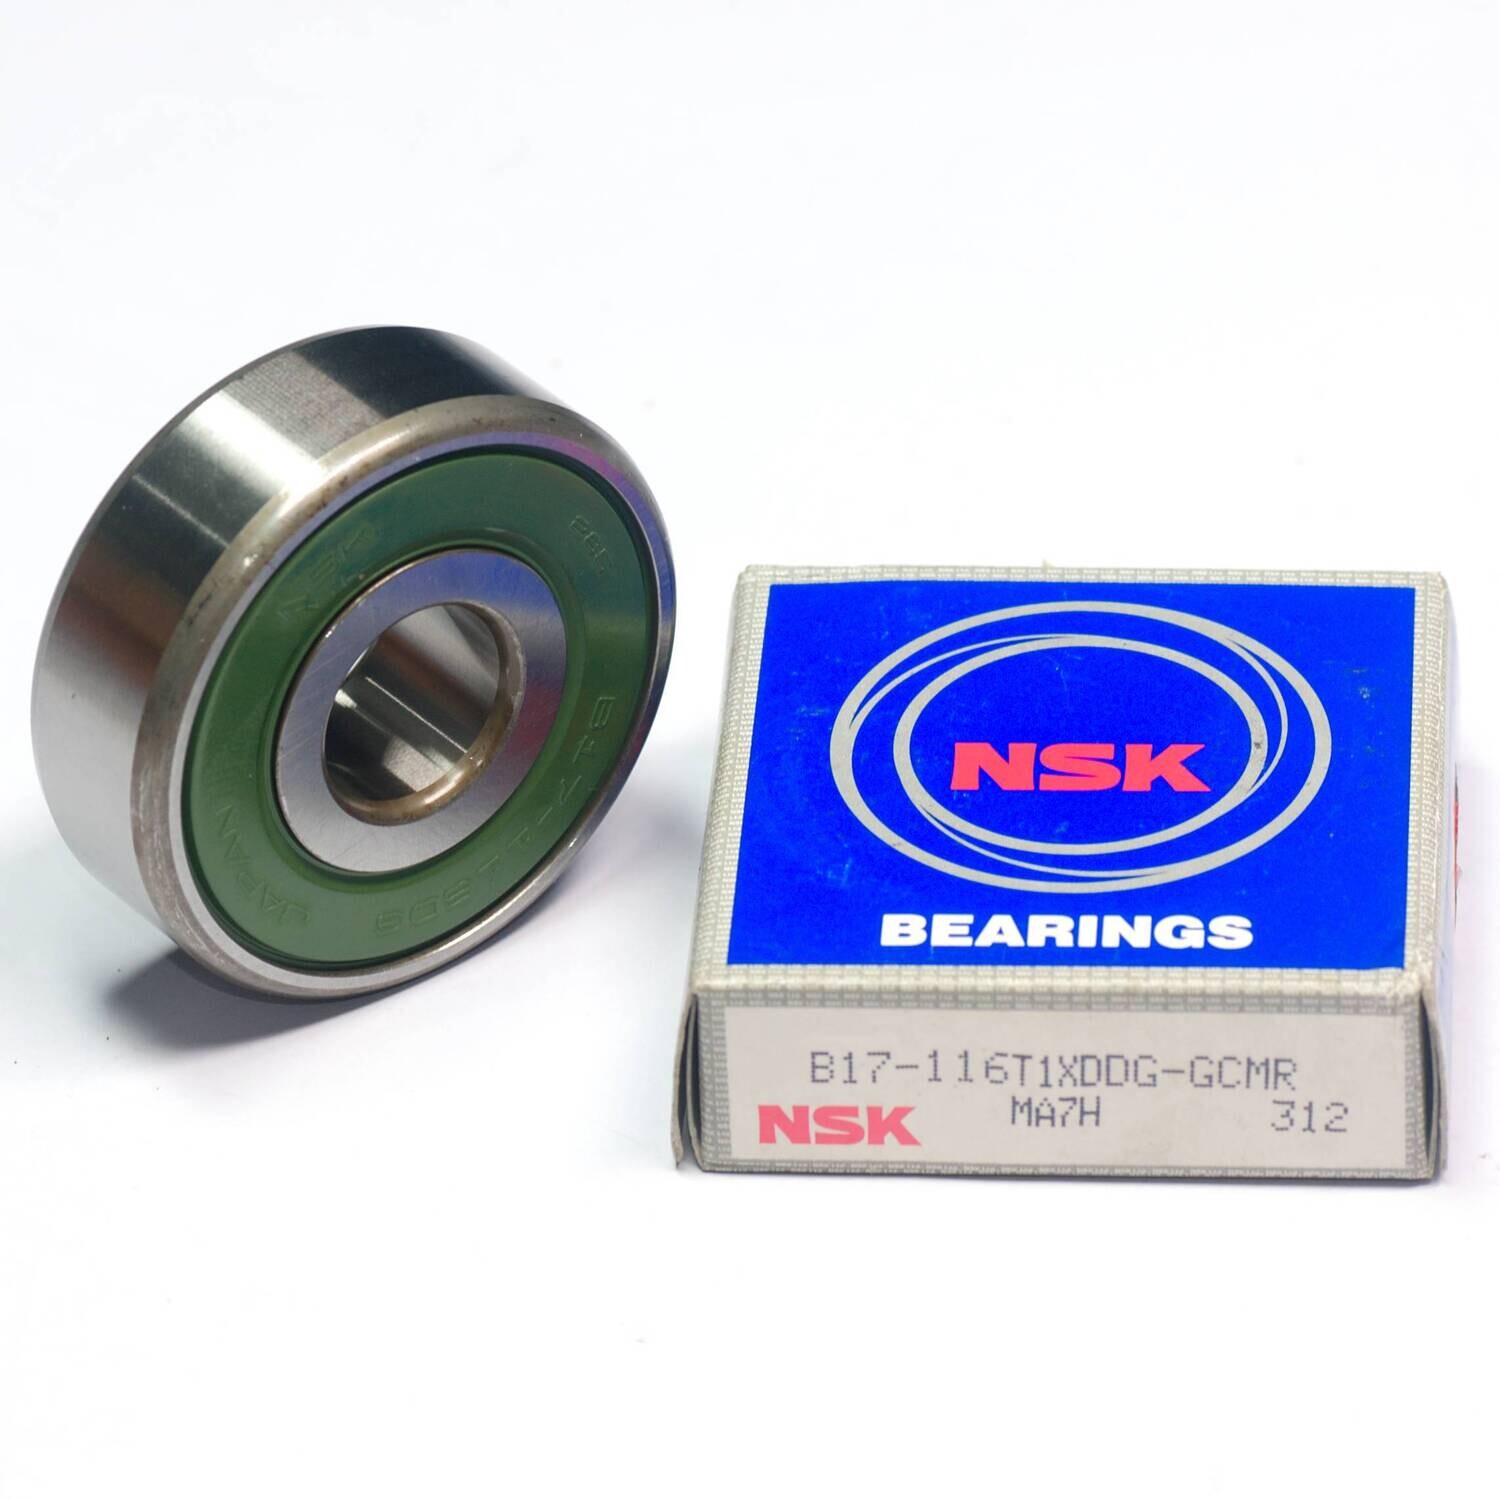 NSK Ball Bearing 17-52-18 B17-116D 5-5226 Fits Mitsubishi Alternators